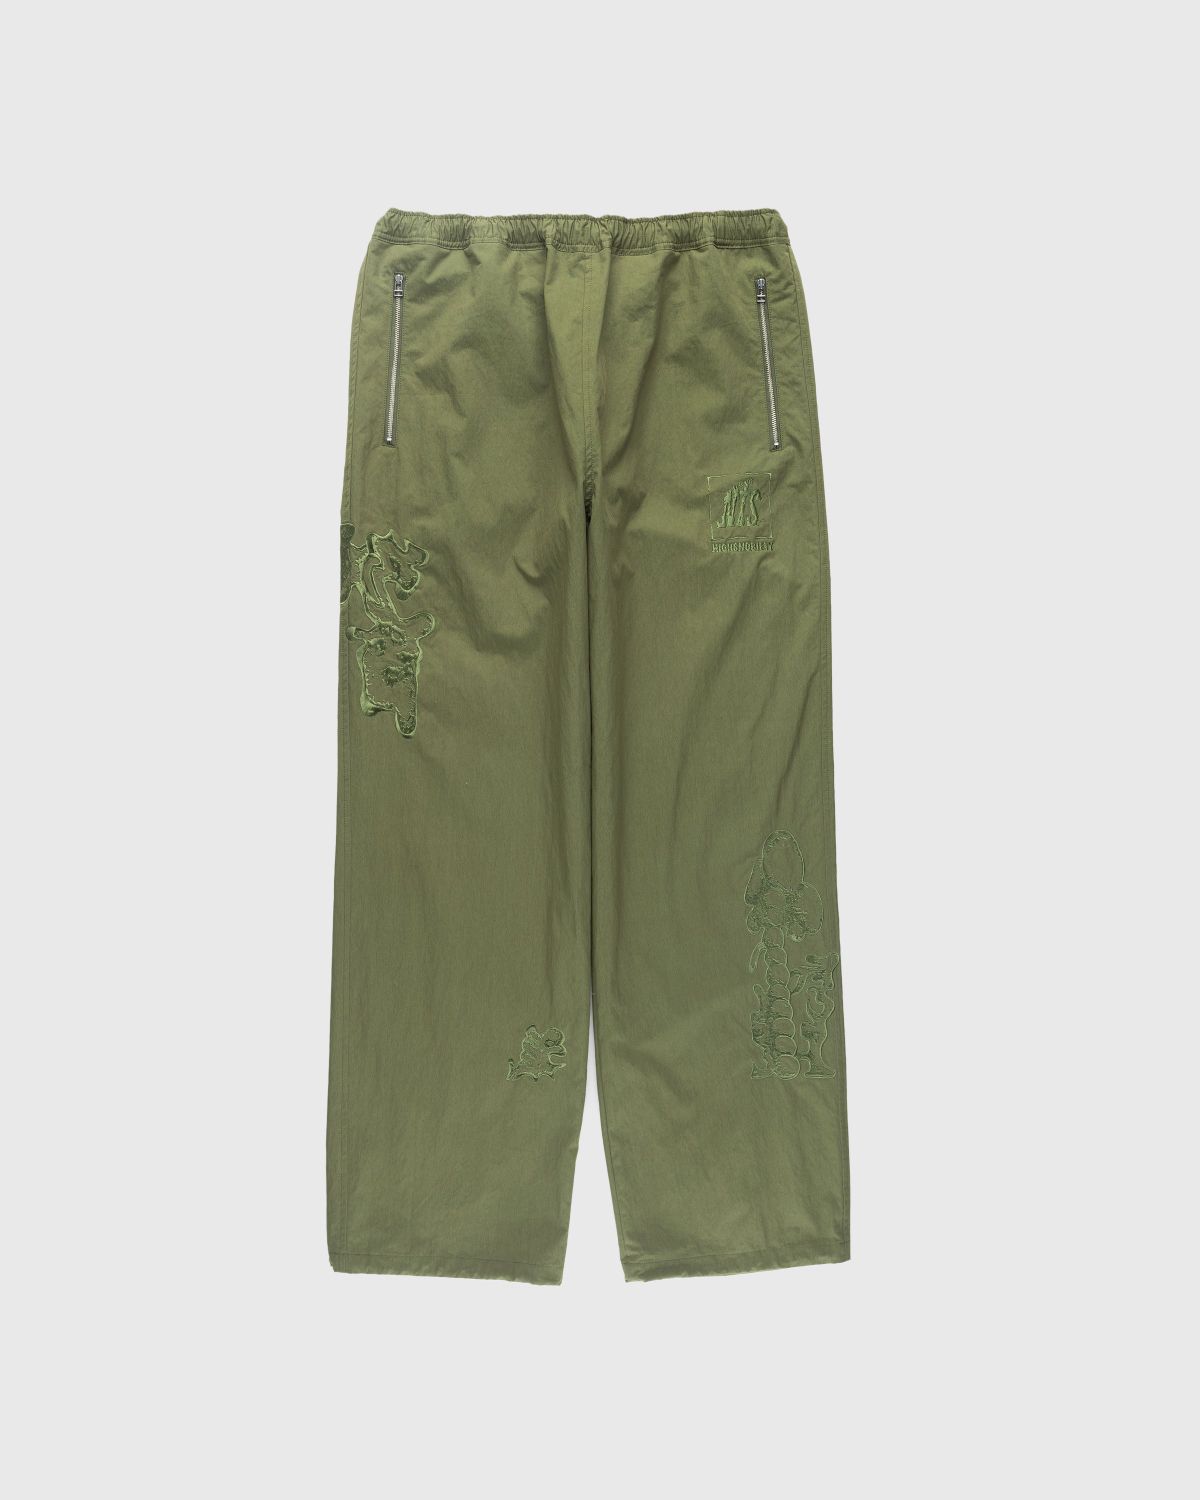 NTS x Highsnobiety – Brushed Nylon Trackpants Green - Pants - Green - Image 1